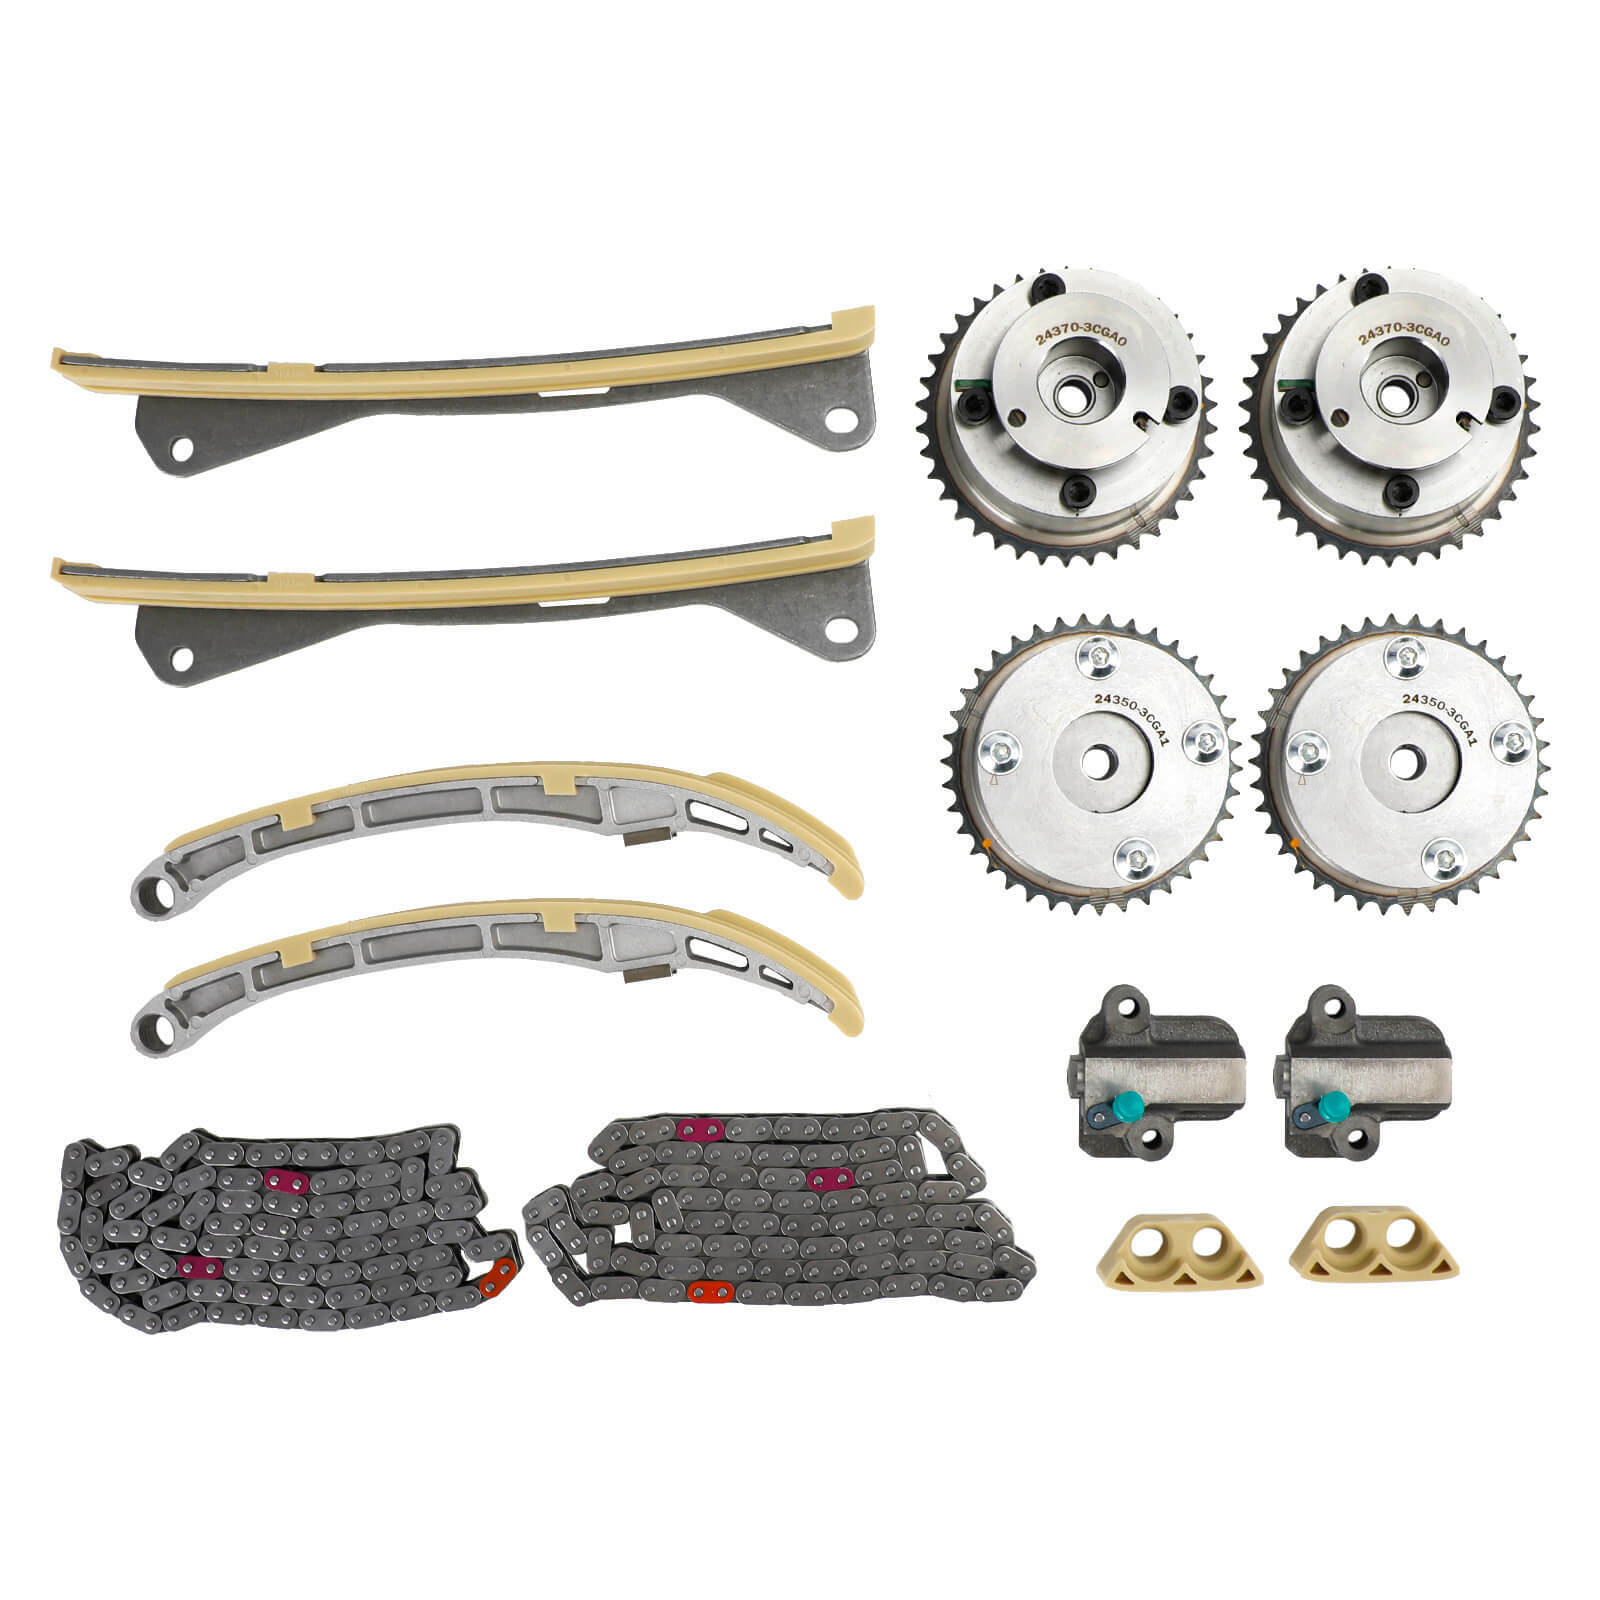 Kia Sorento 3.3L 2014-2020 Timing Chain Kit Hyundai Sedona 3.3L 24350-3CGA1